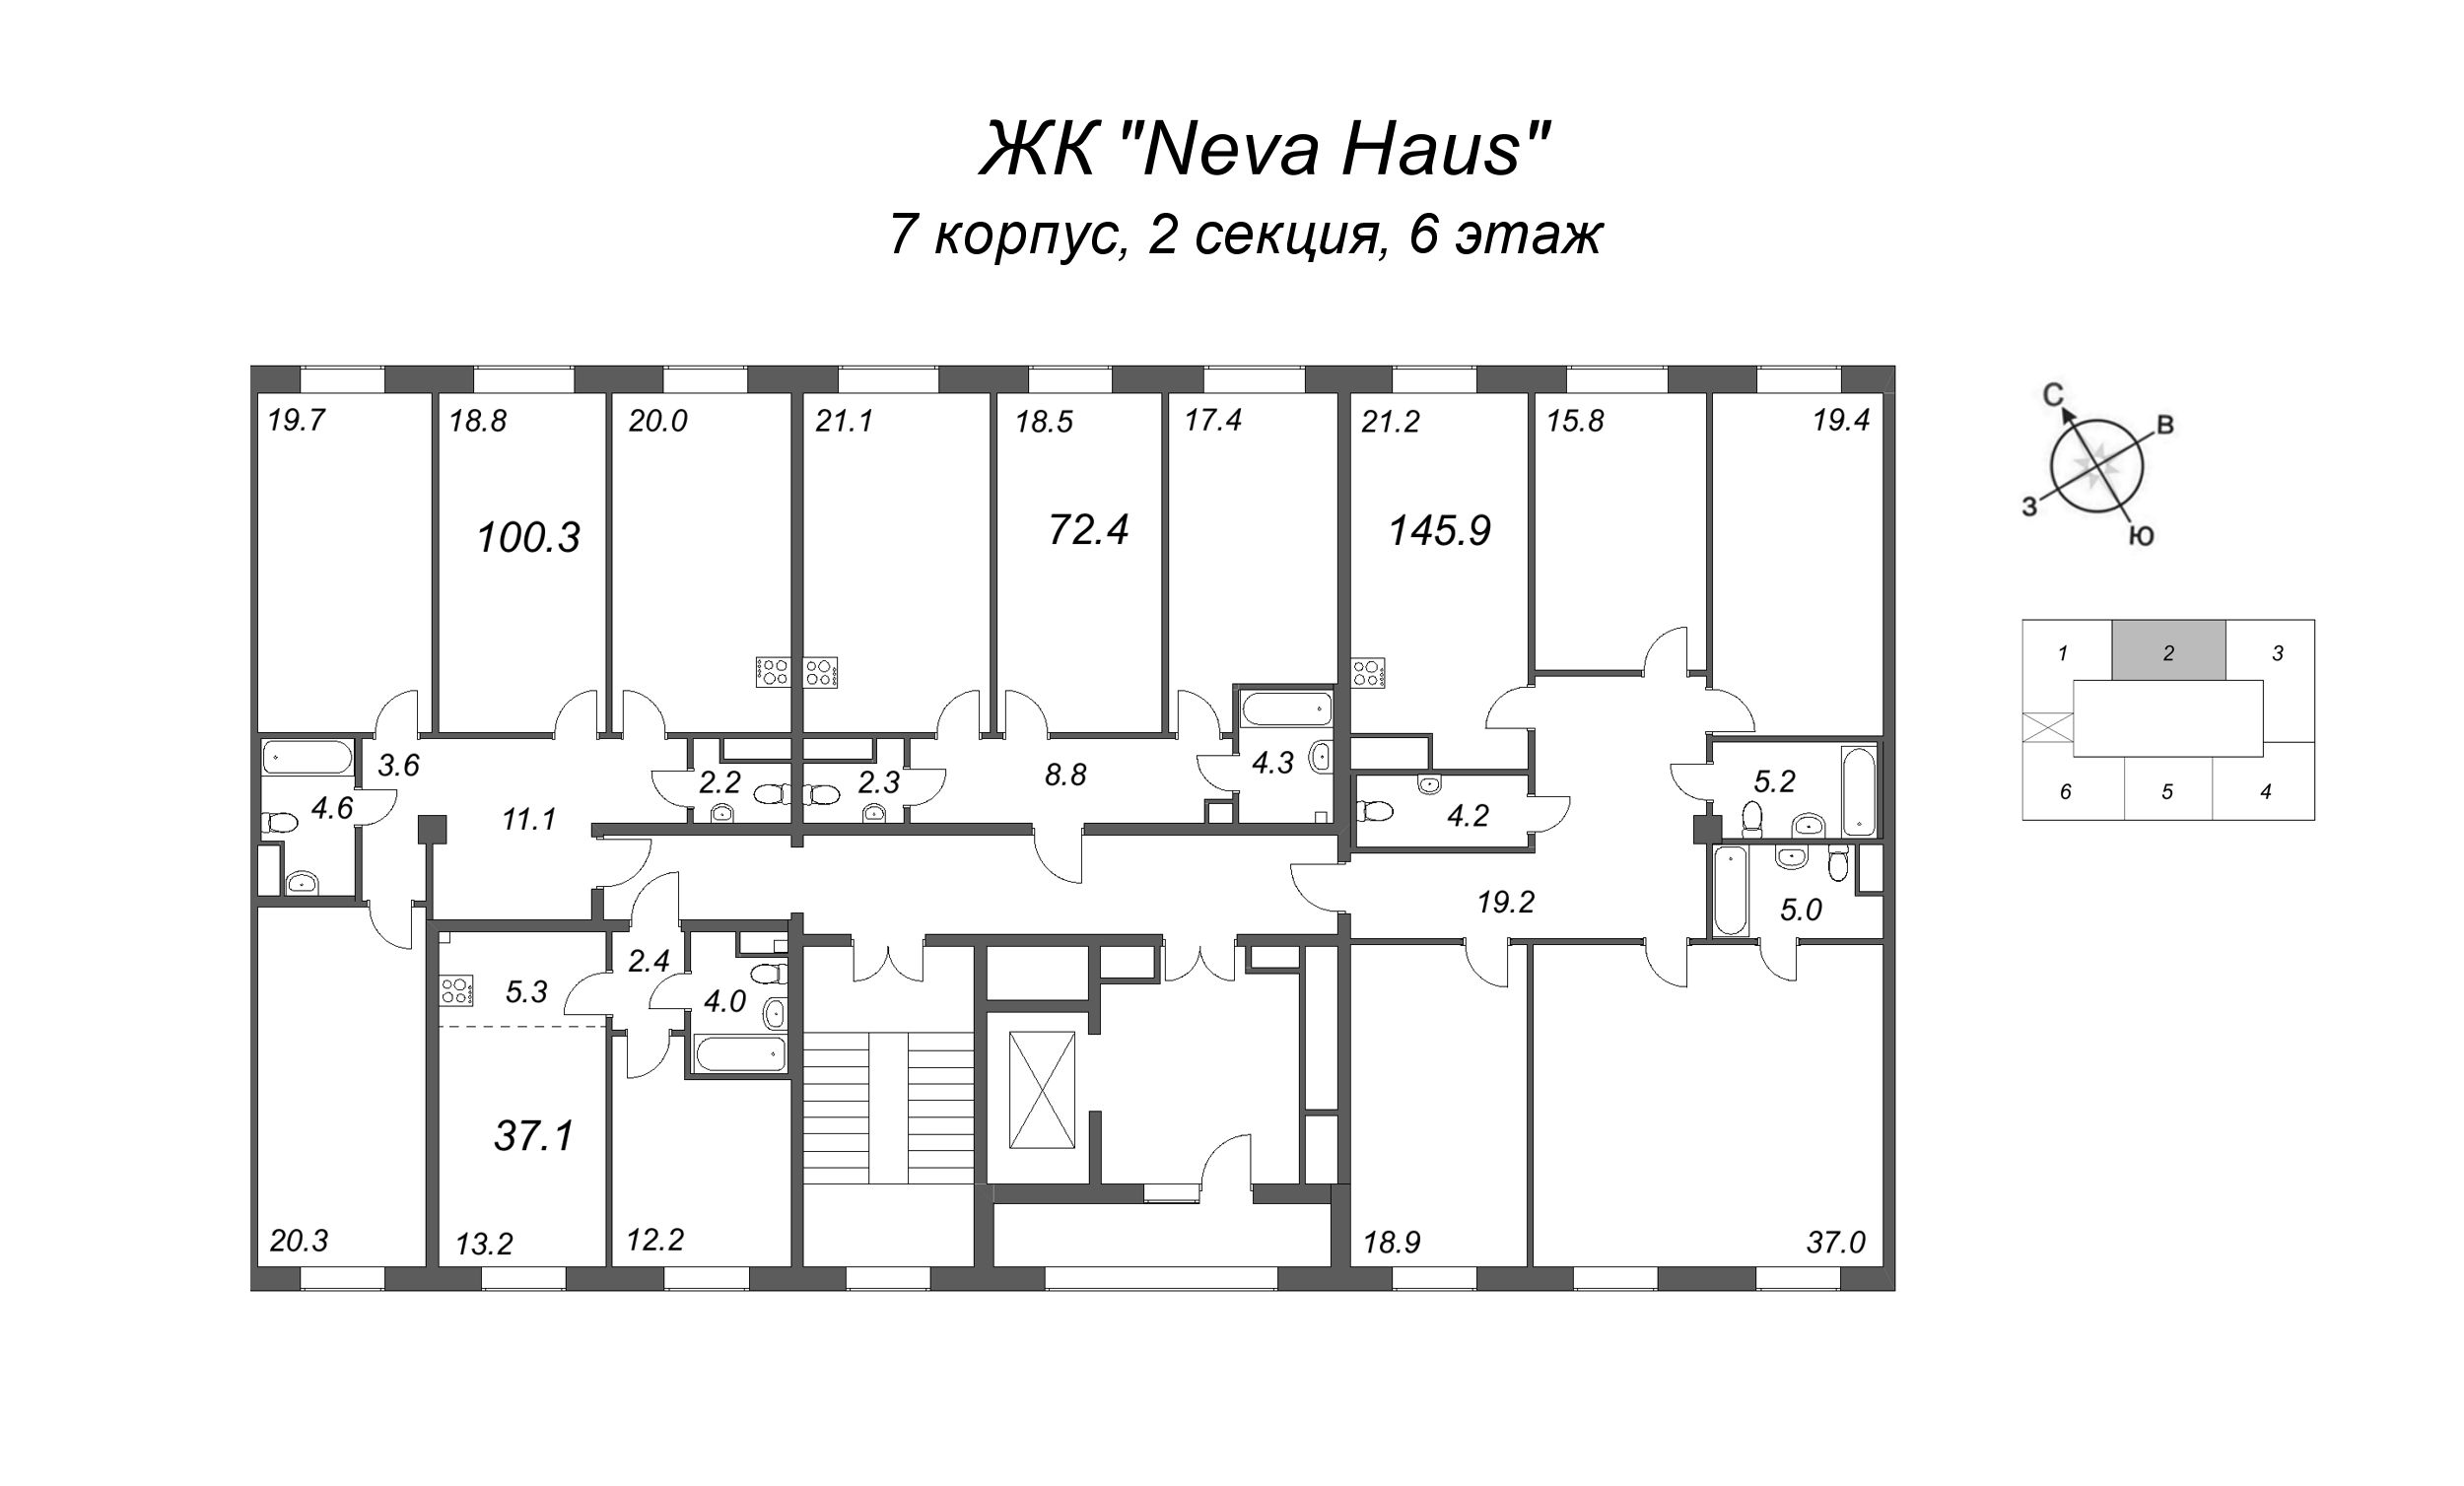 5-комнатная (Евро) квартира, 147.2 м² - планировка этажа